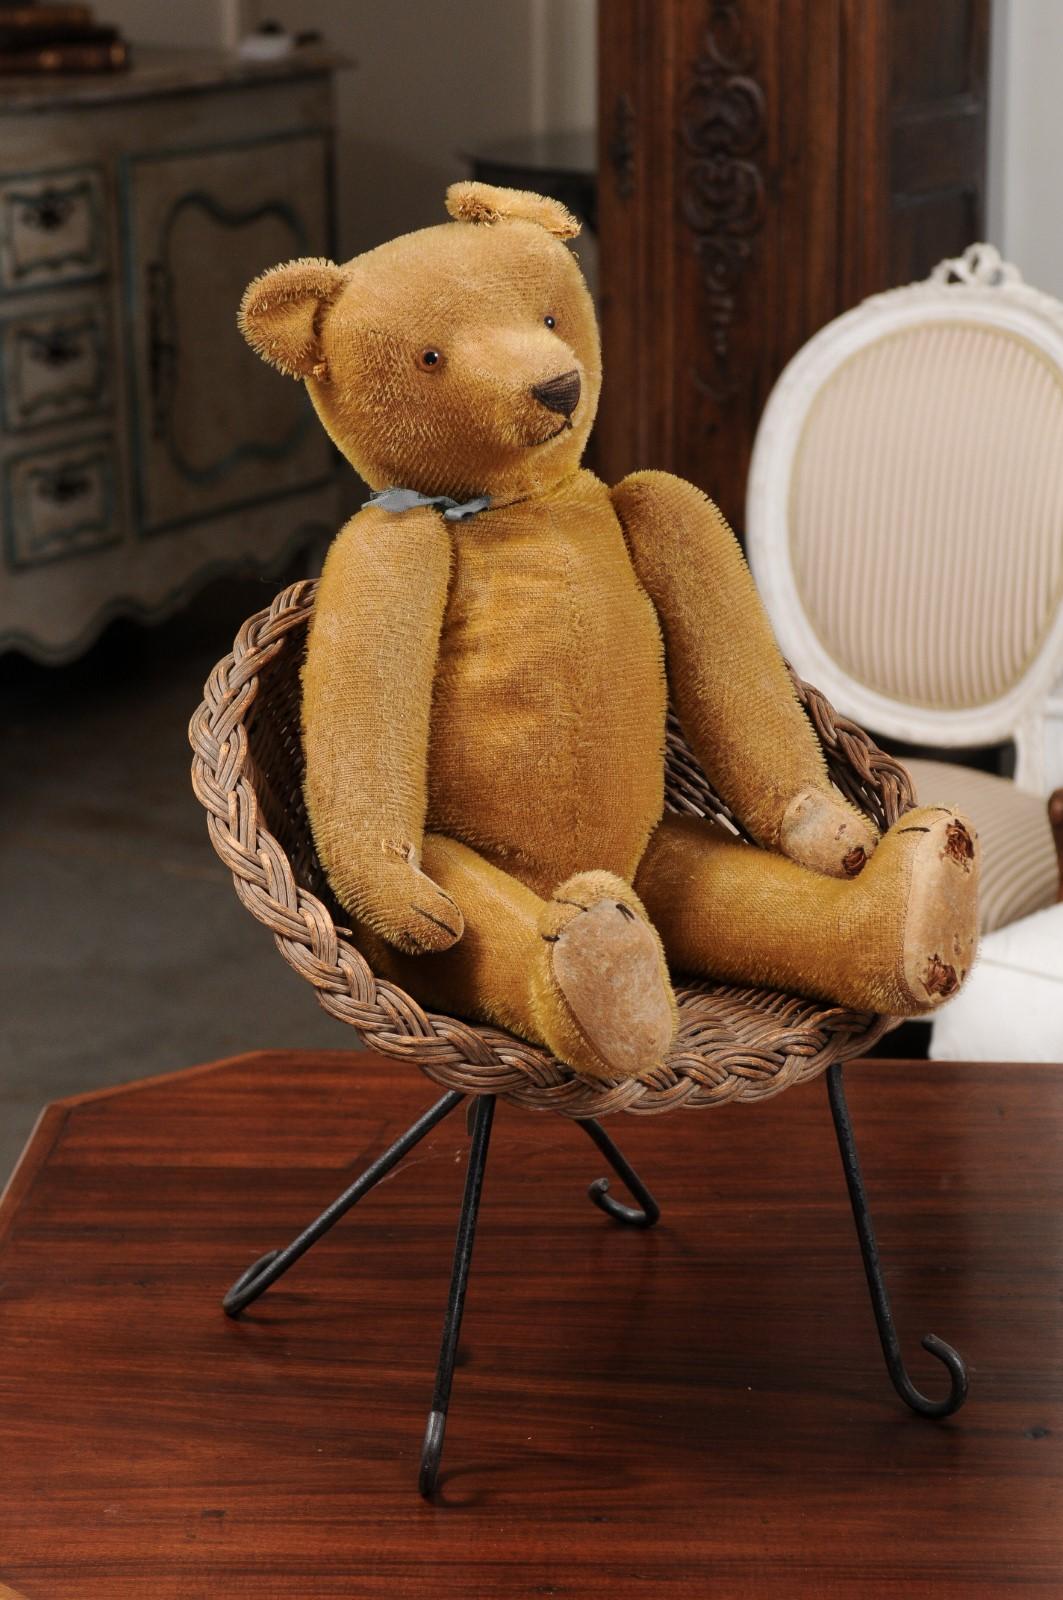 small wicker chair for teddy bear